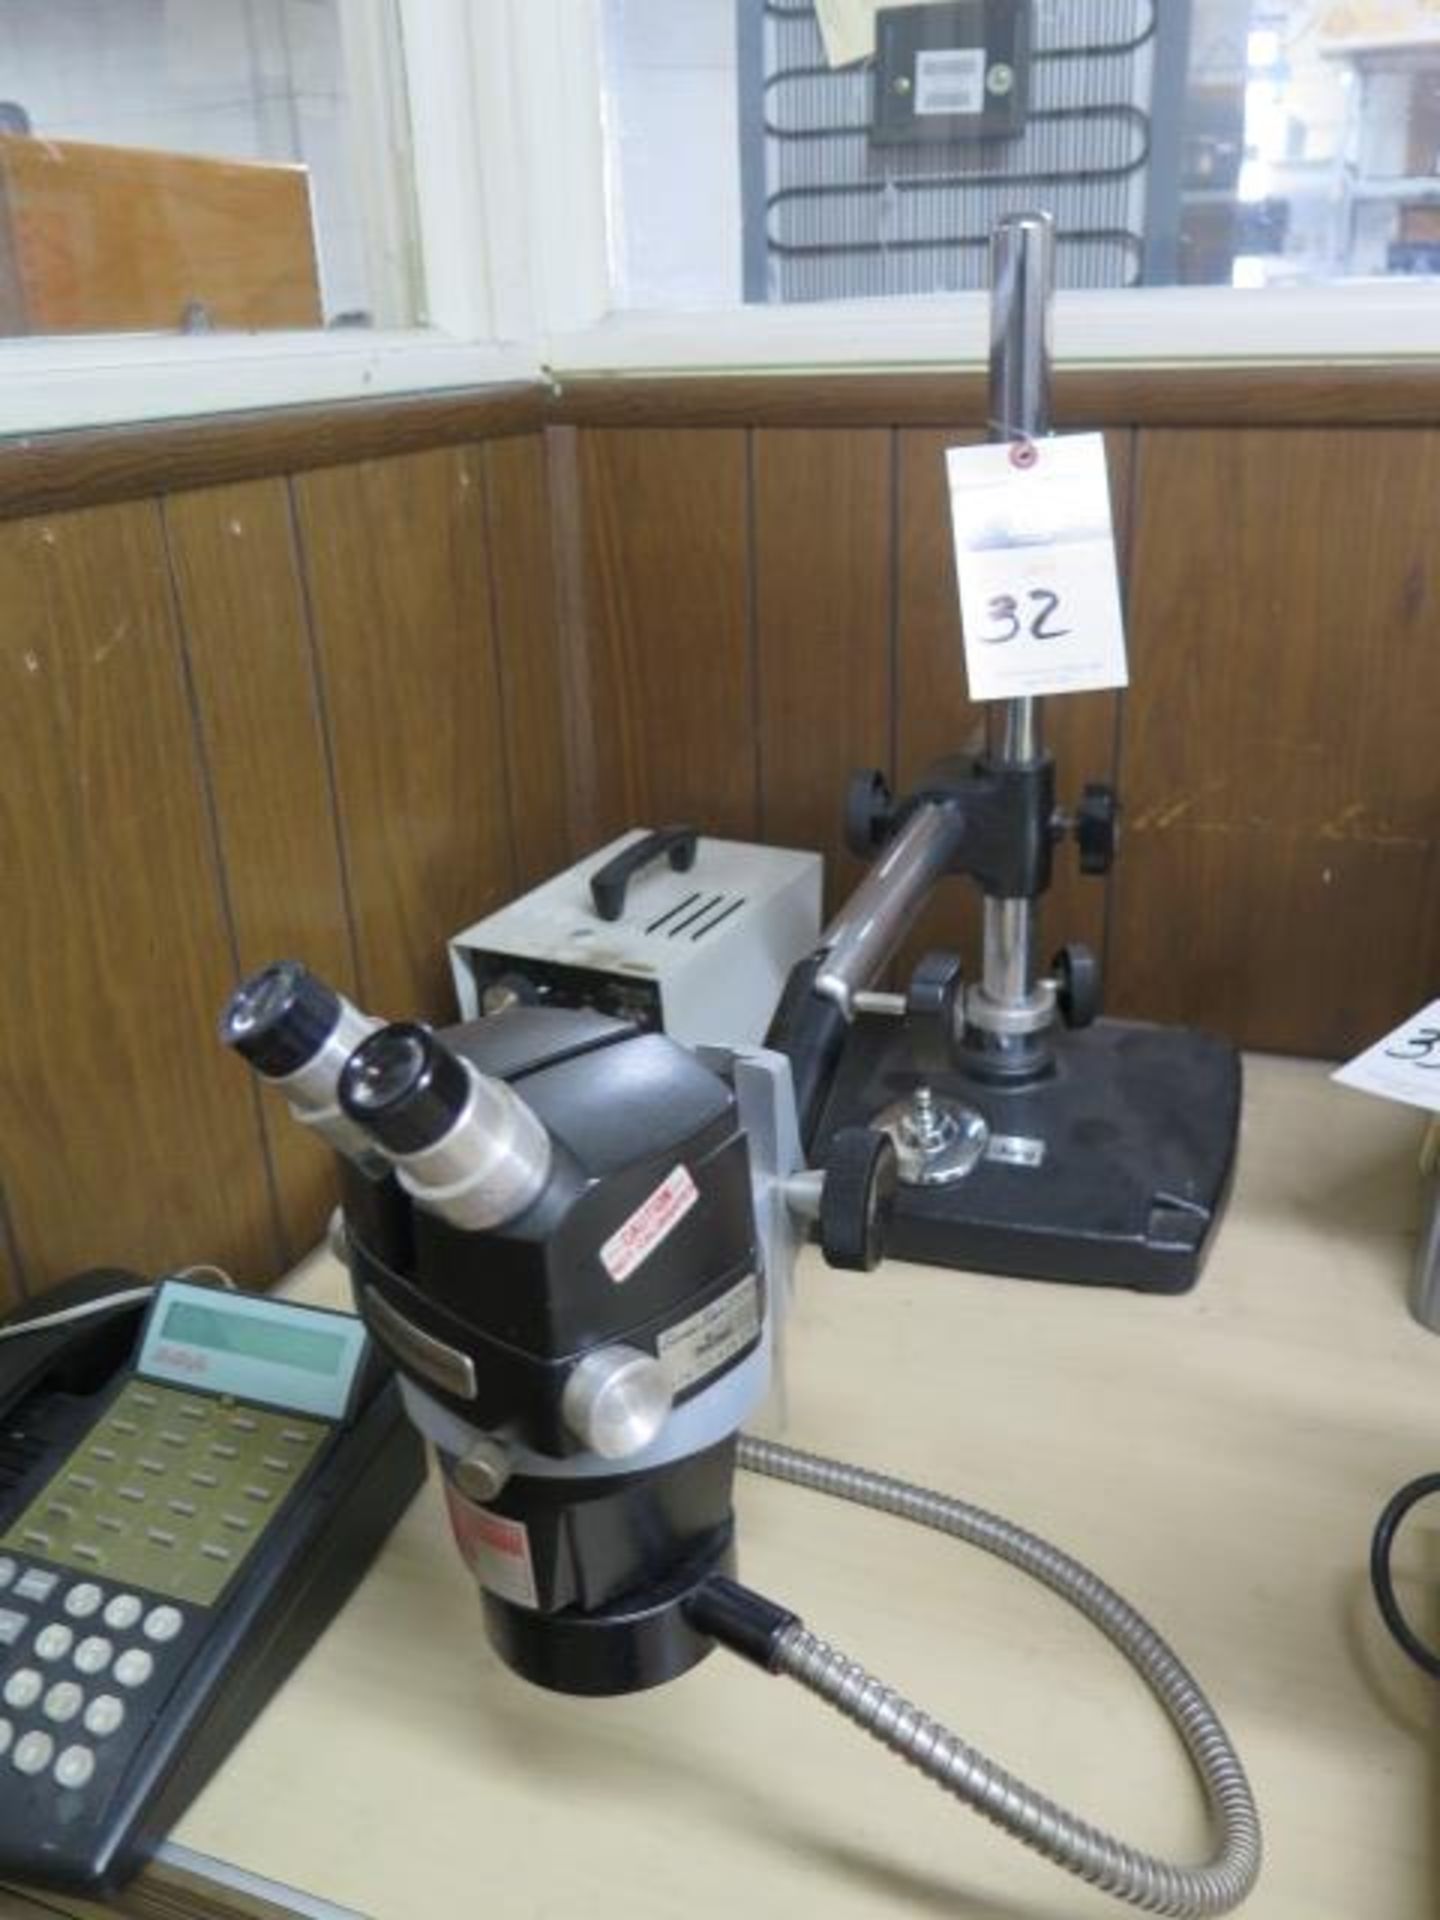 Reichert "Stwereo Star Zoom" Stereo Microscope w/ Light Source (SOLD AS-IS - NO WARRANTY)